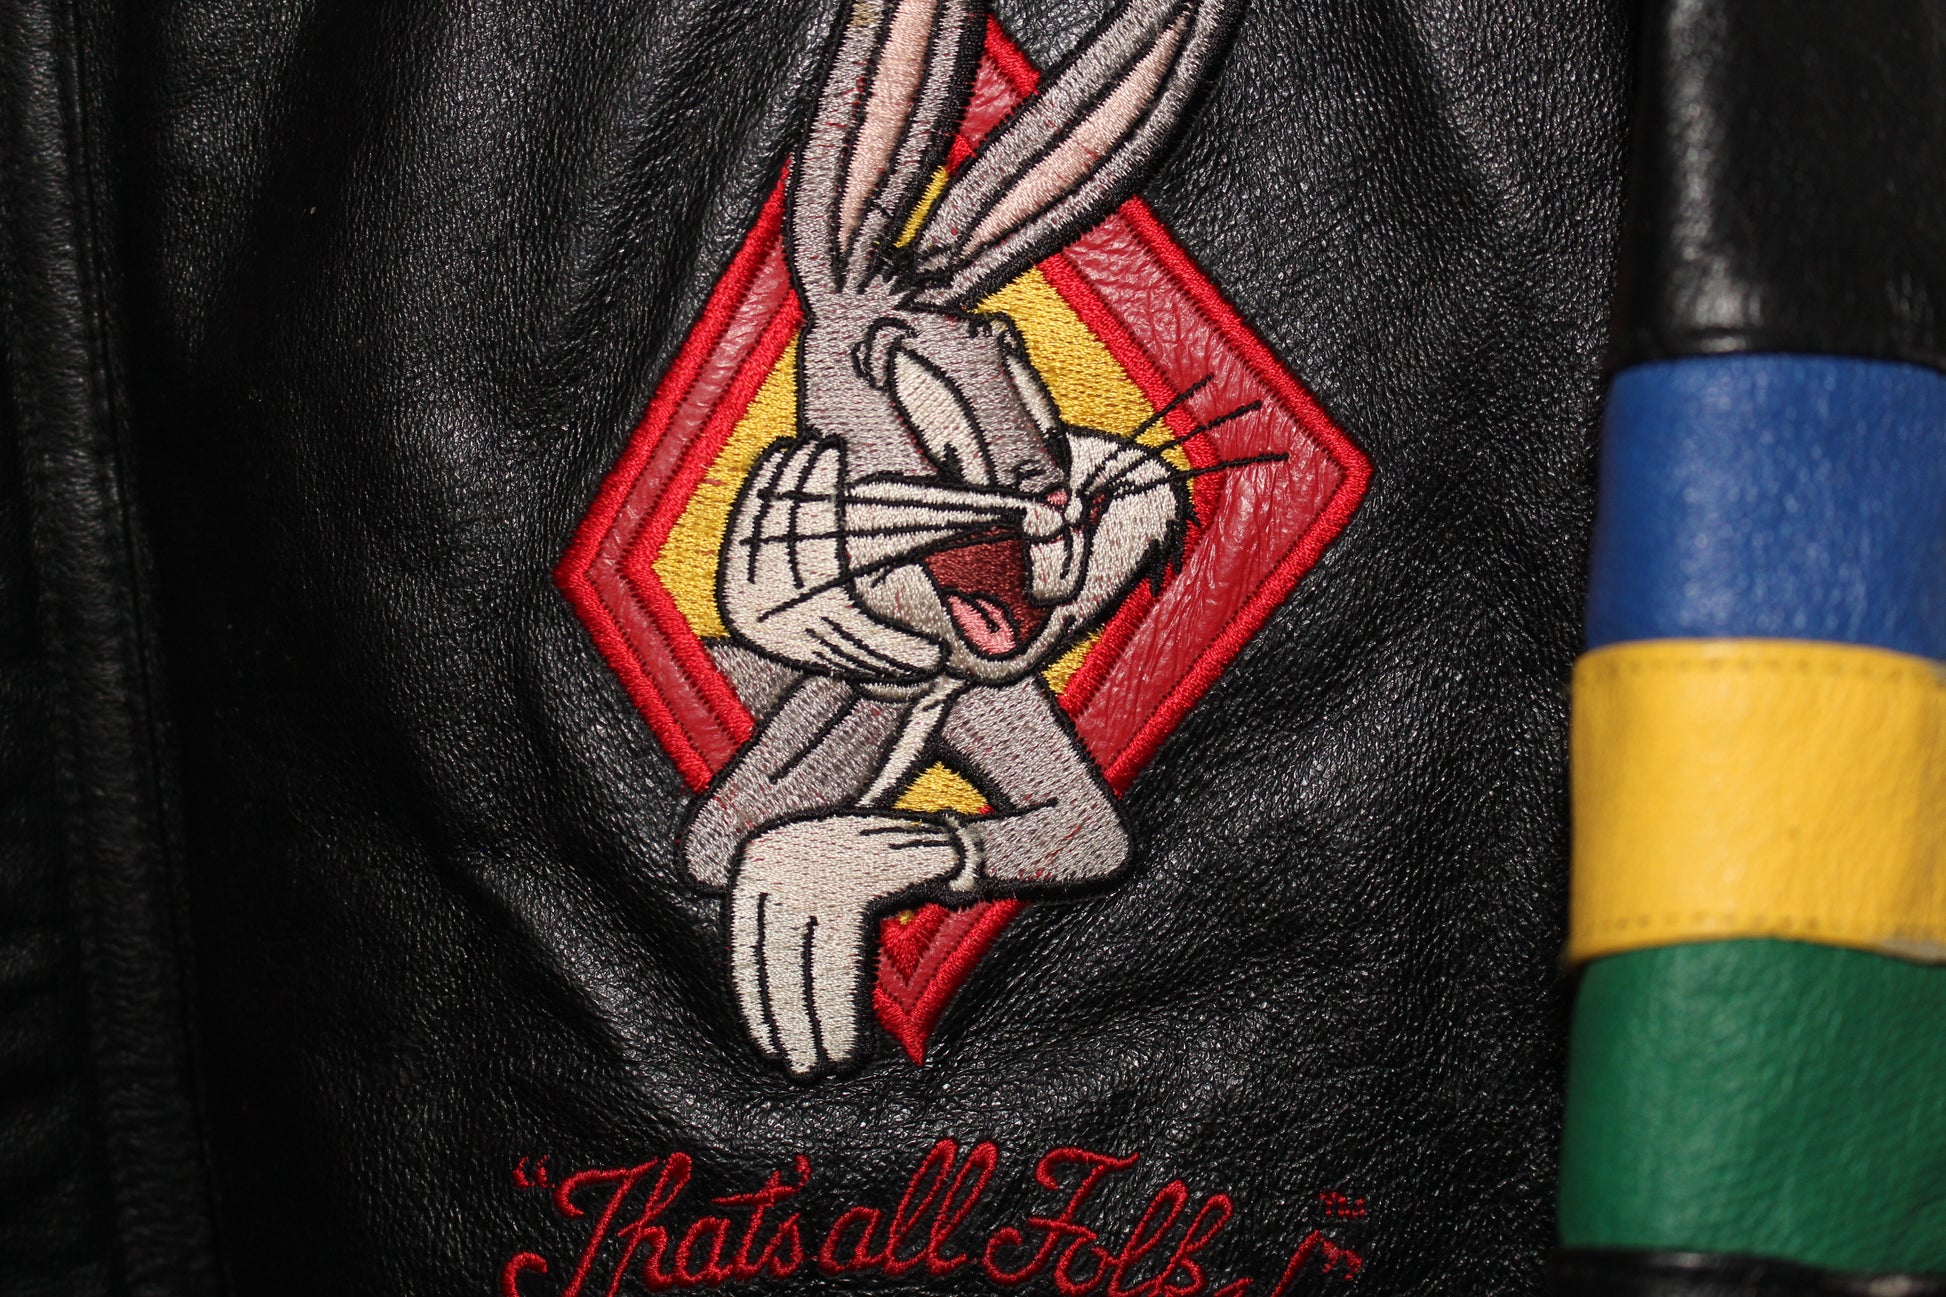 Warner Bros Looney Tunes Bugs Bunny Varsity Jacket